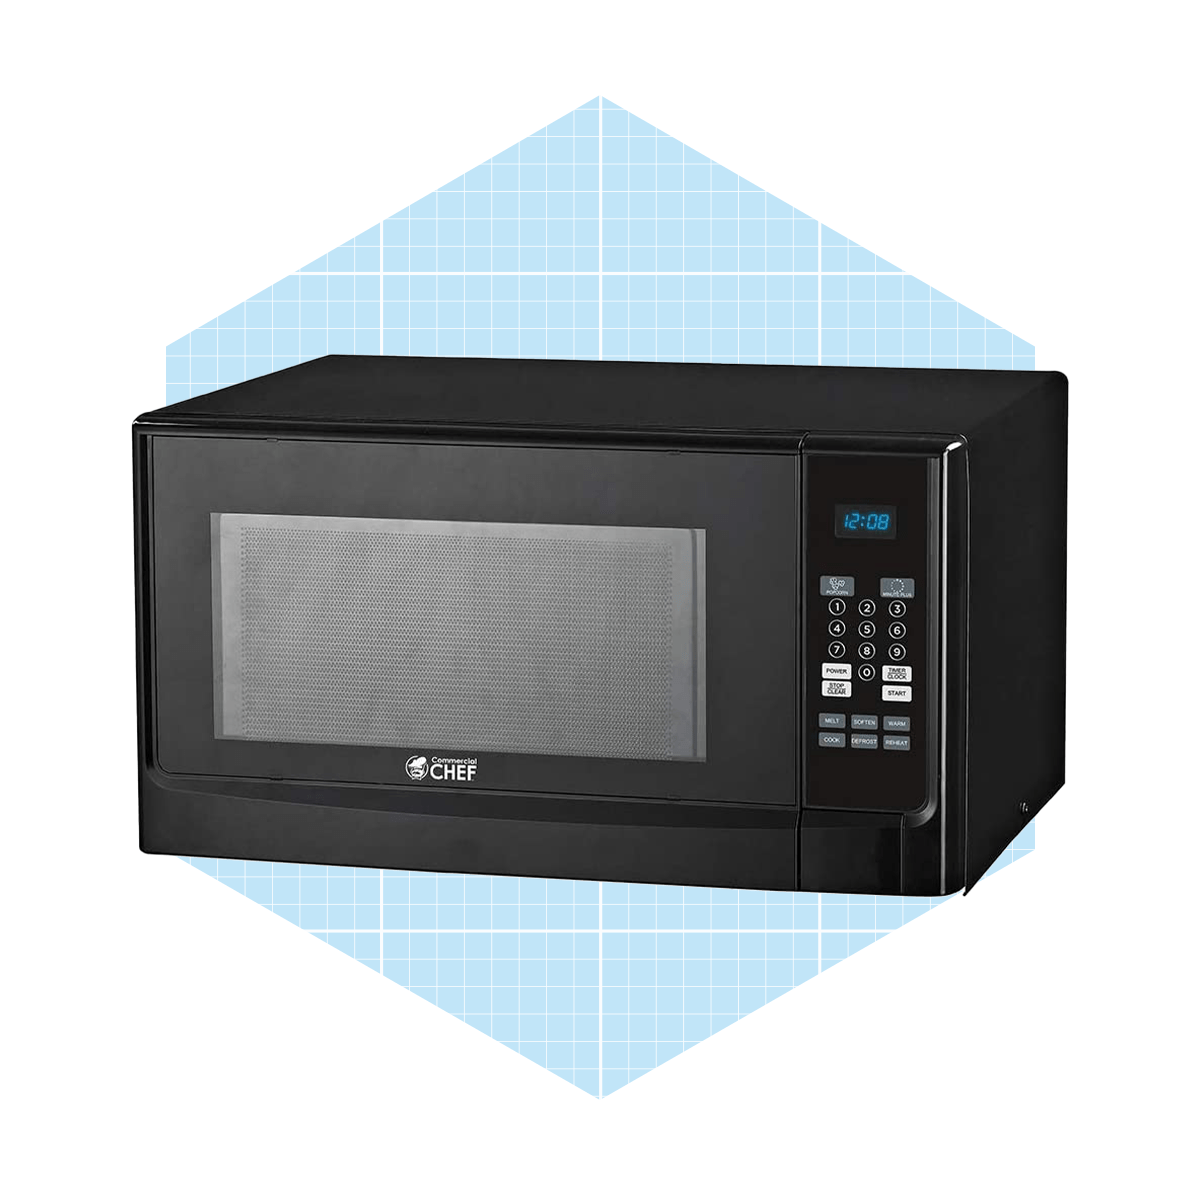 Commercial Chef Countertop Microwave Oven Ecomm Via Amazon.com